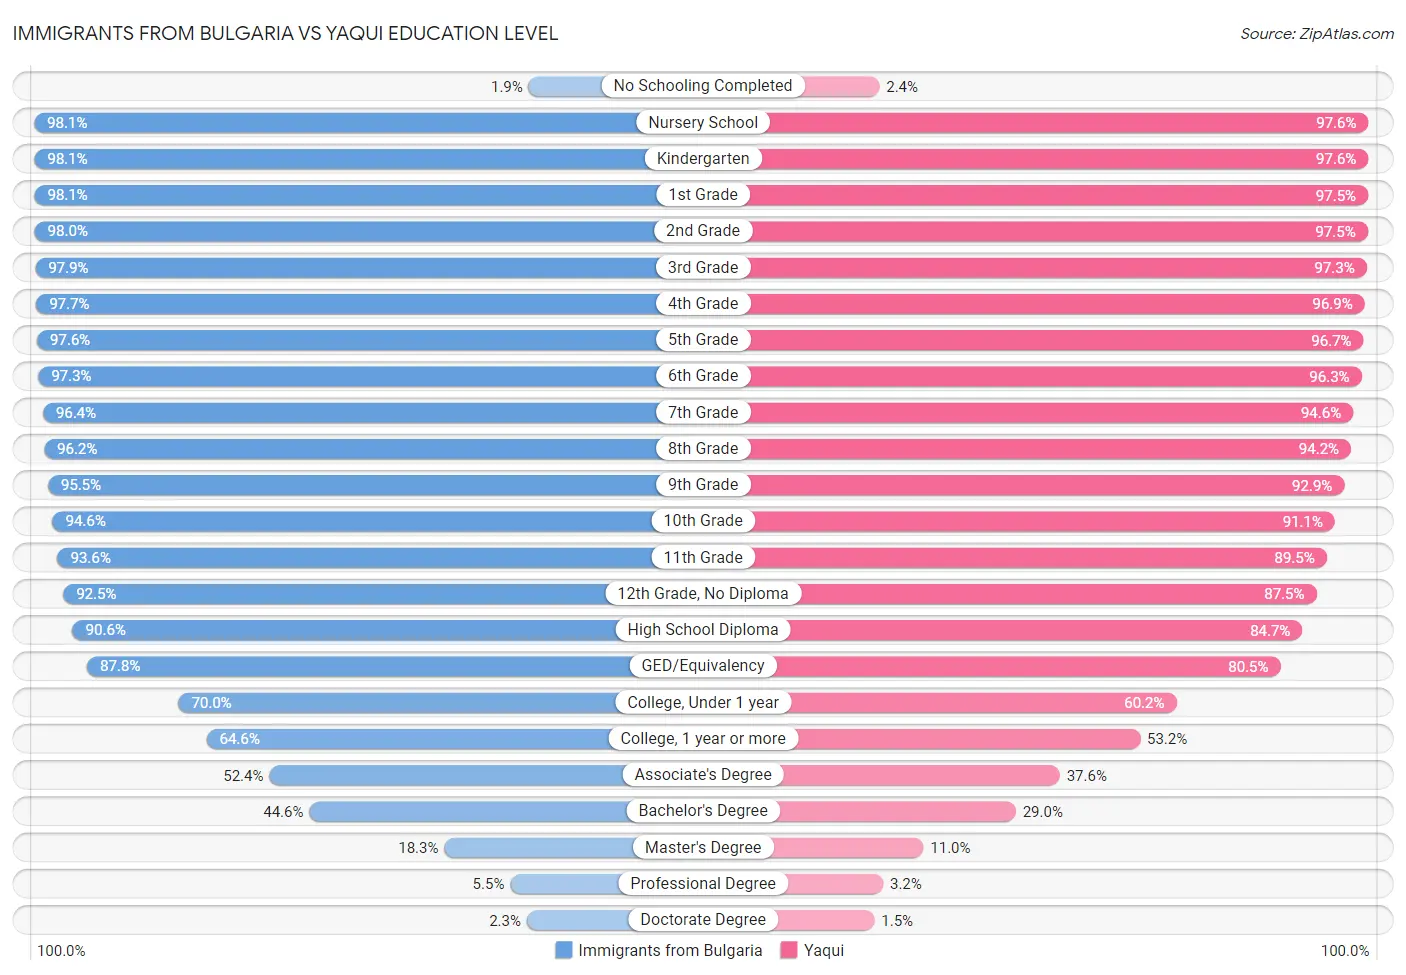 Immigrants from Bulgaria vs Yaqui Education Level